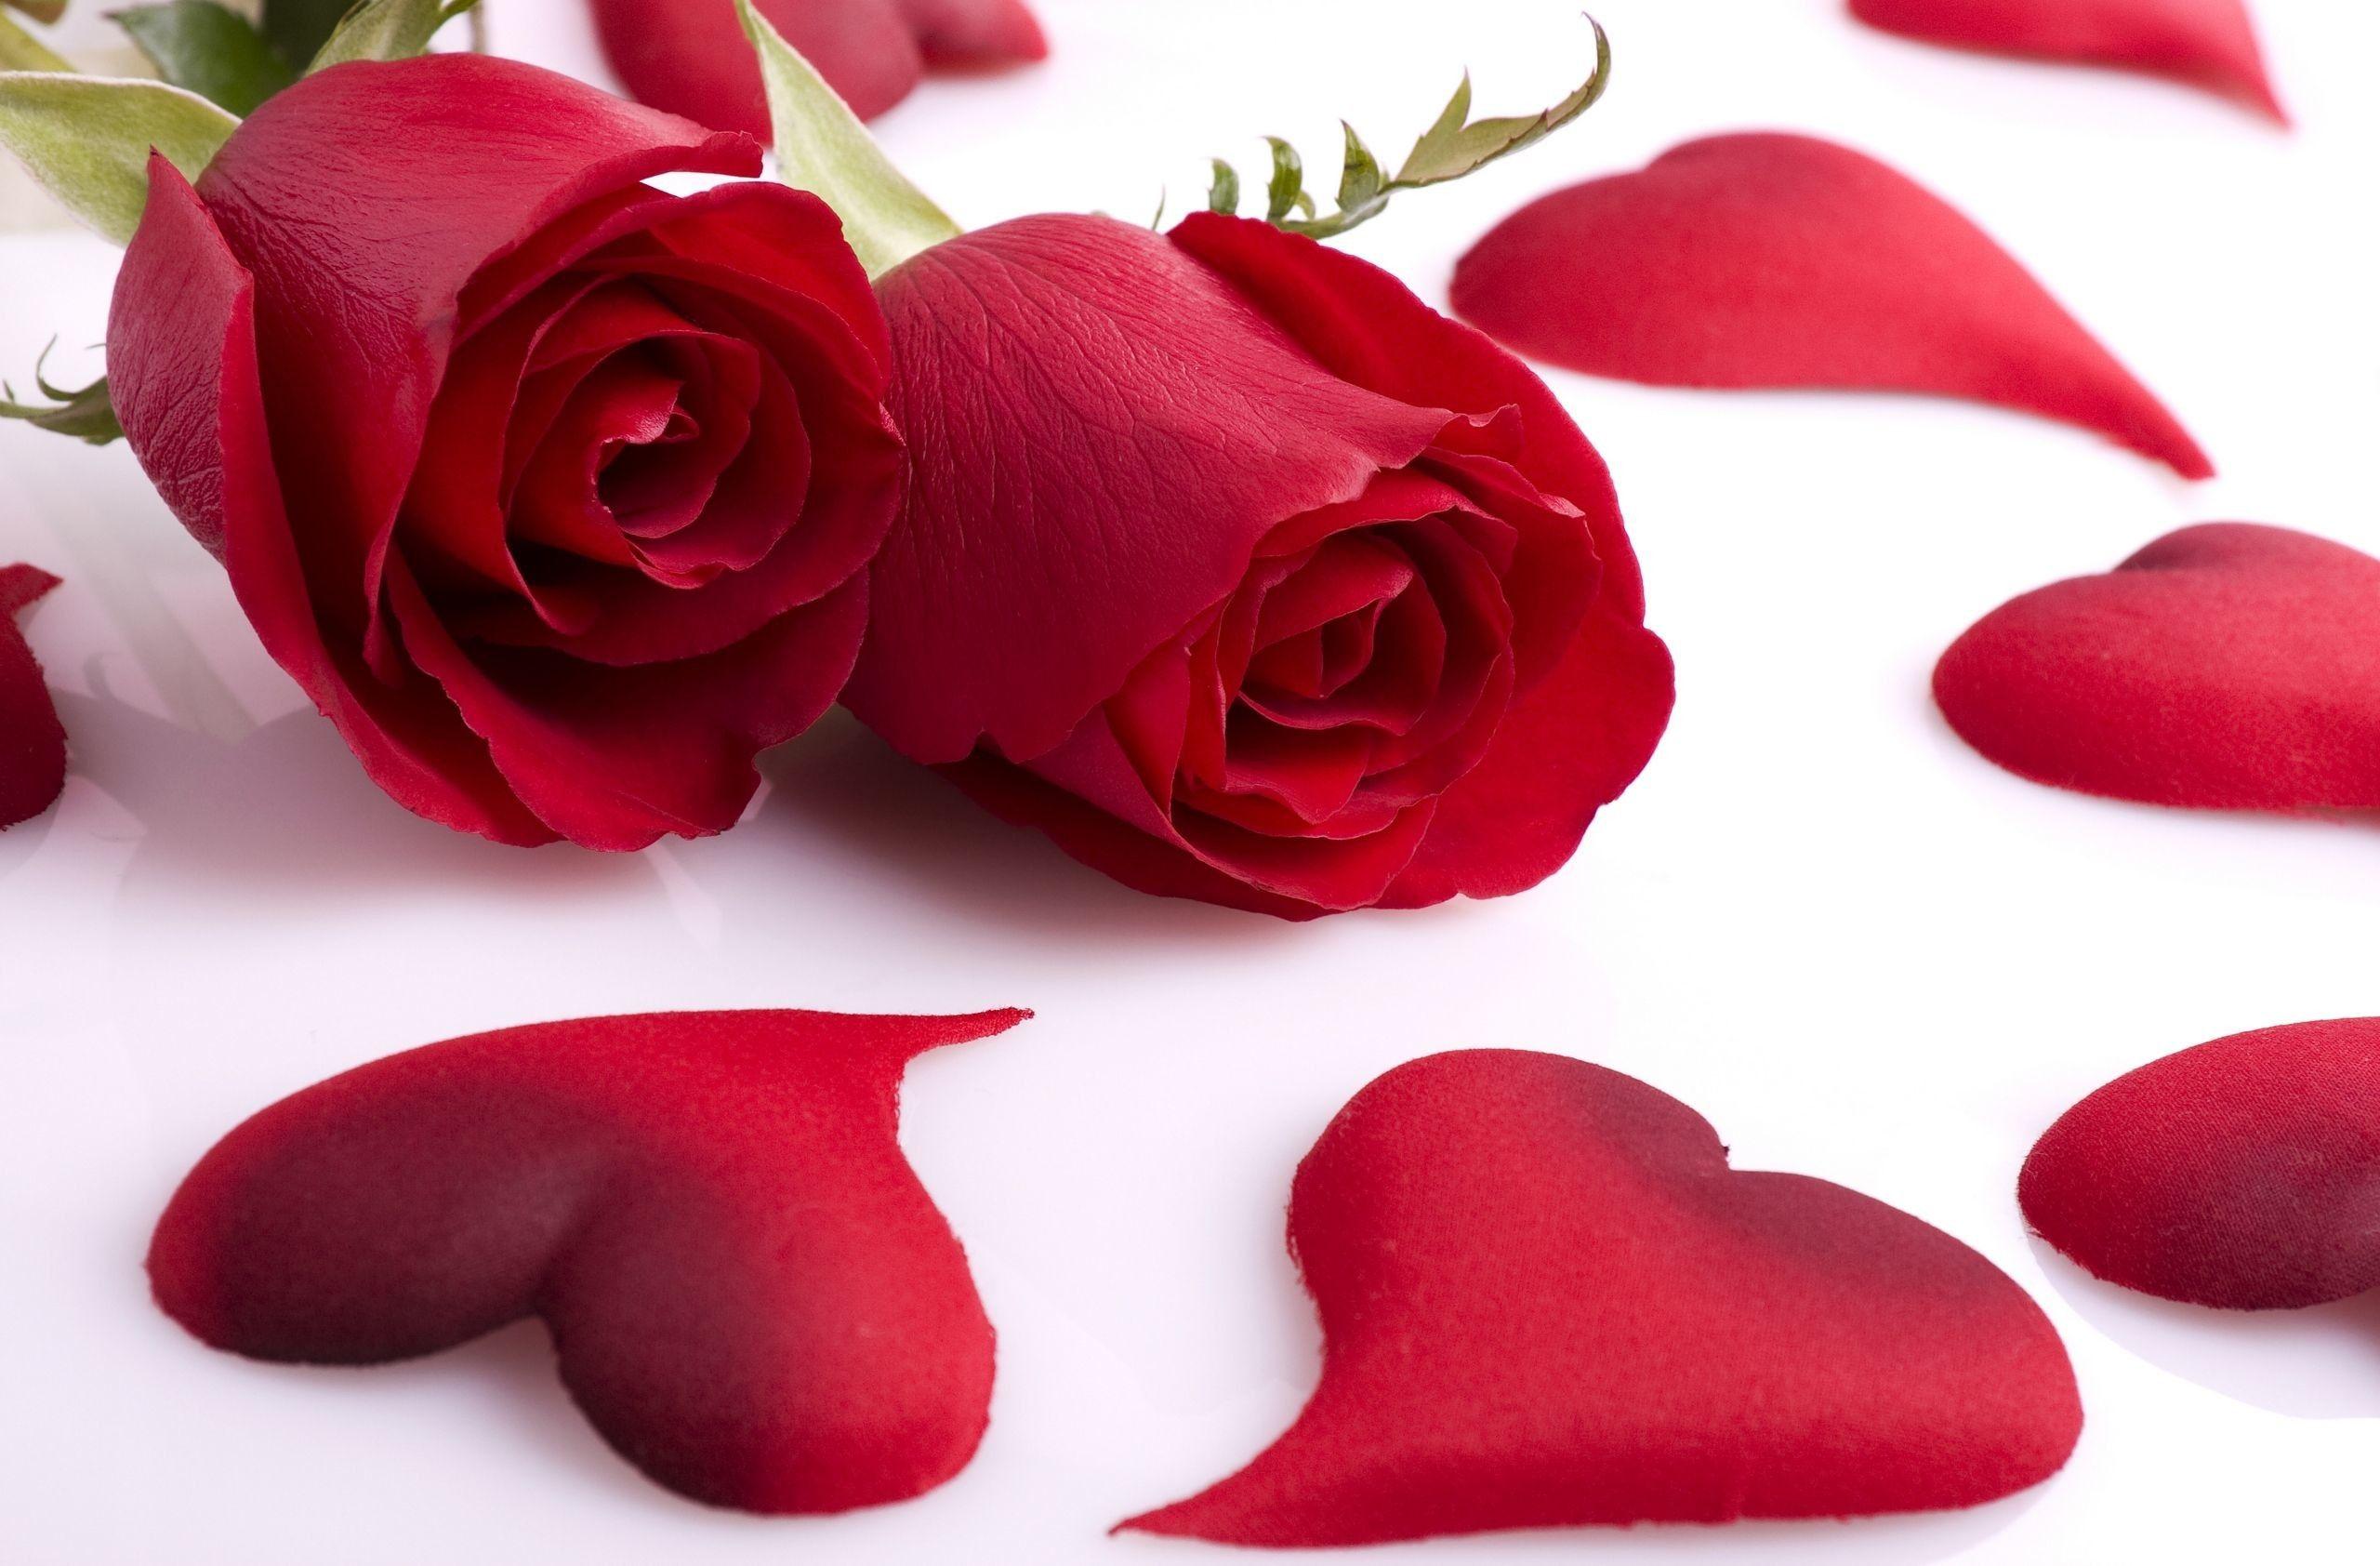 Red Rose Heart Wallpaper